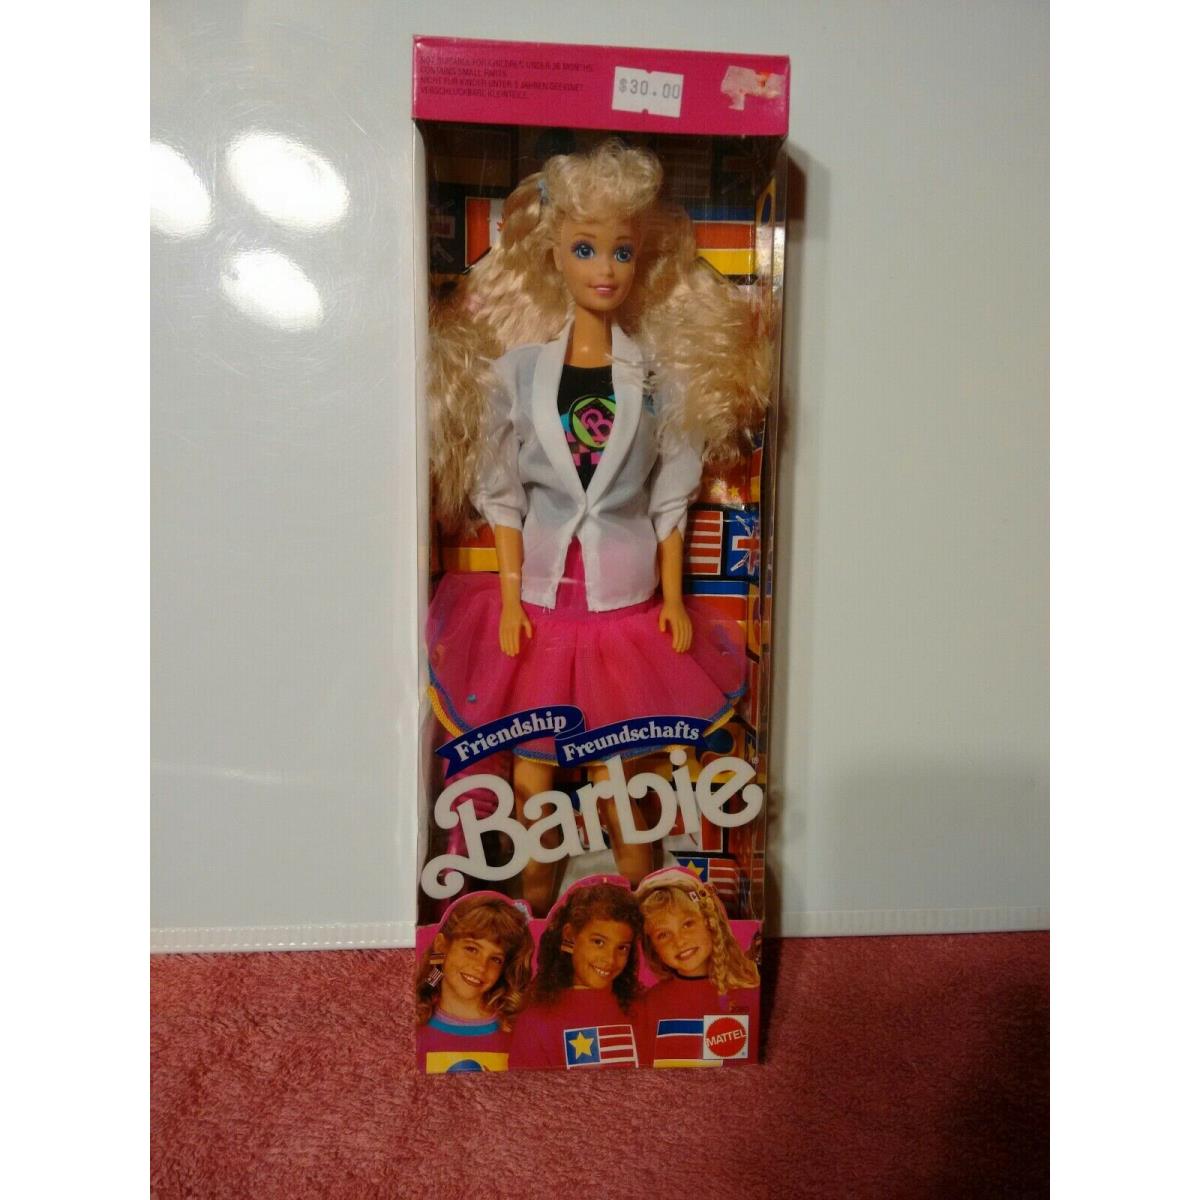 1991 Mattel Friendship Freundschafts Barbie Doll 2080 Rare Nrfb